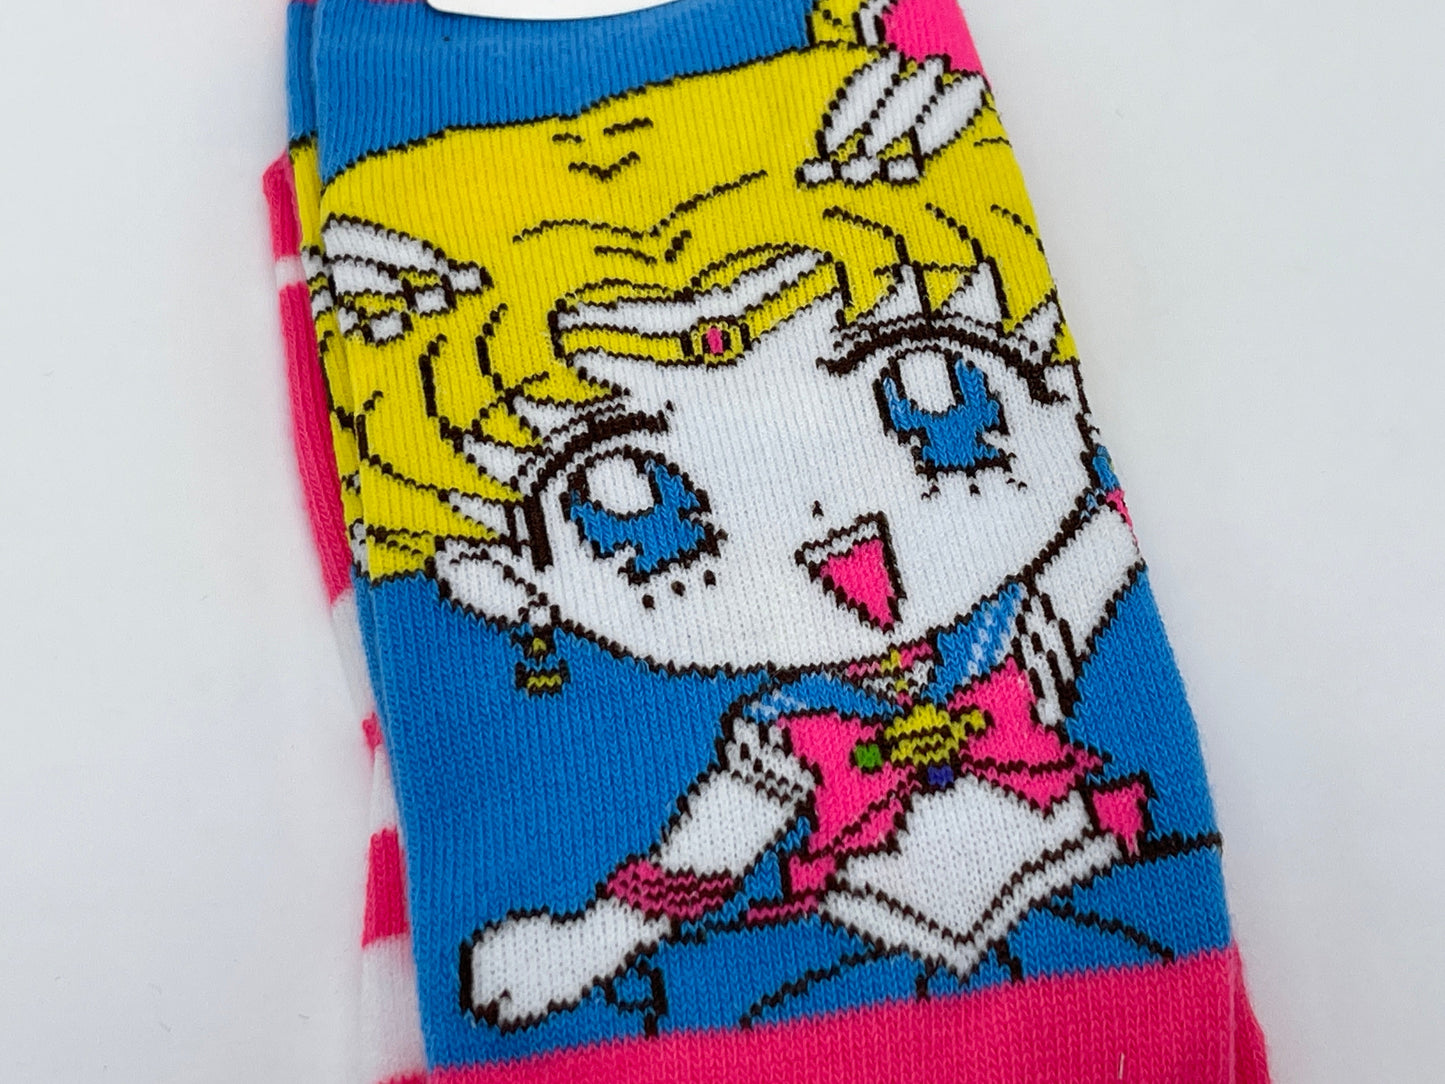 Pretty Guardian Sailor Moon "Socks" Crystal size 8-12 